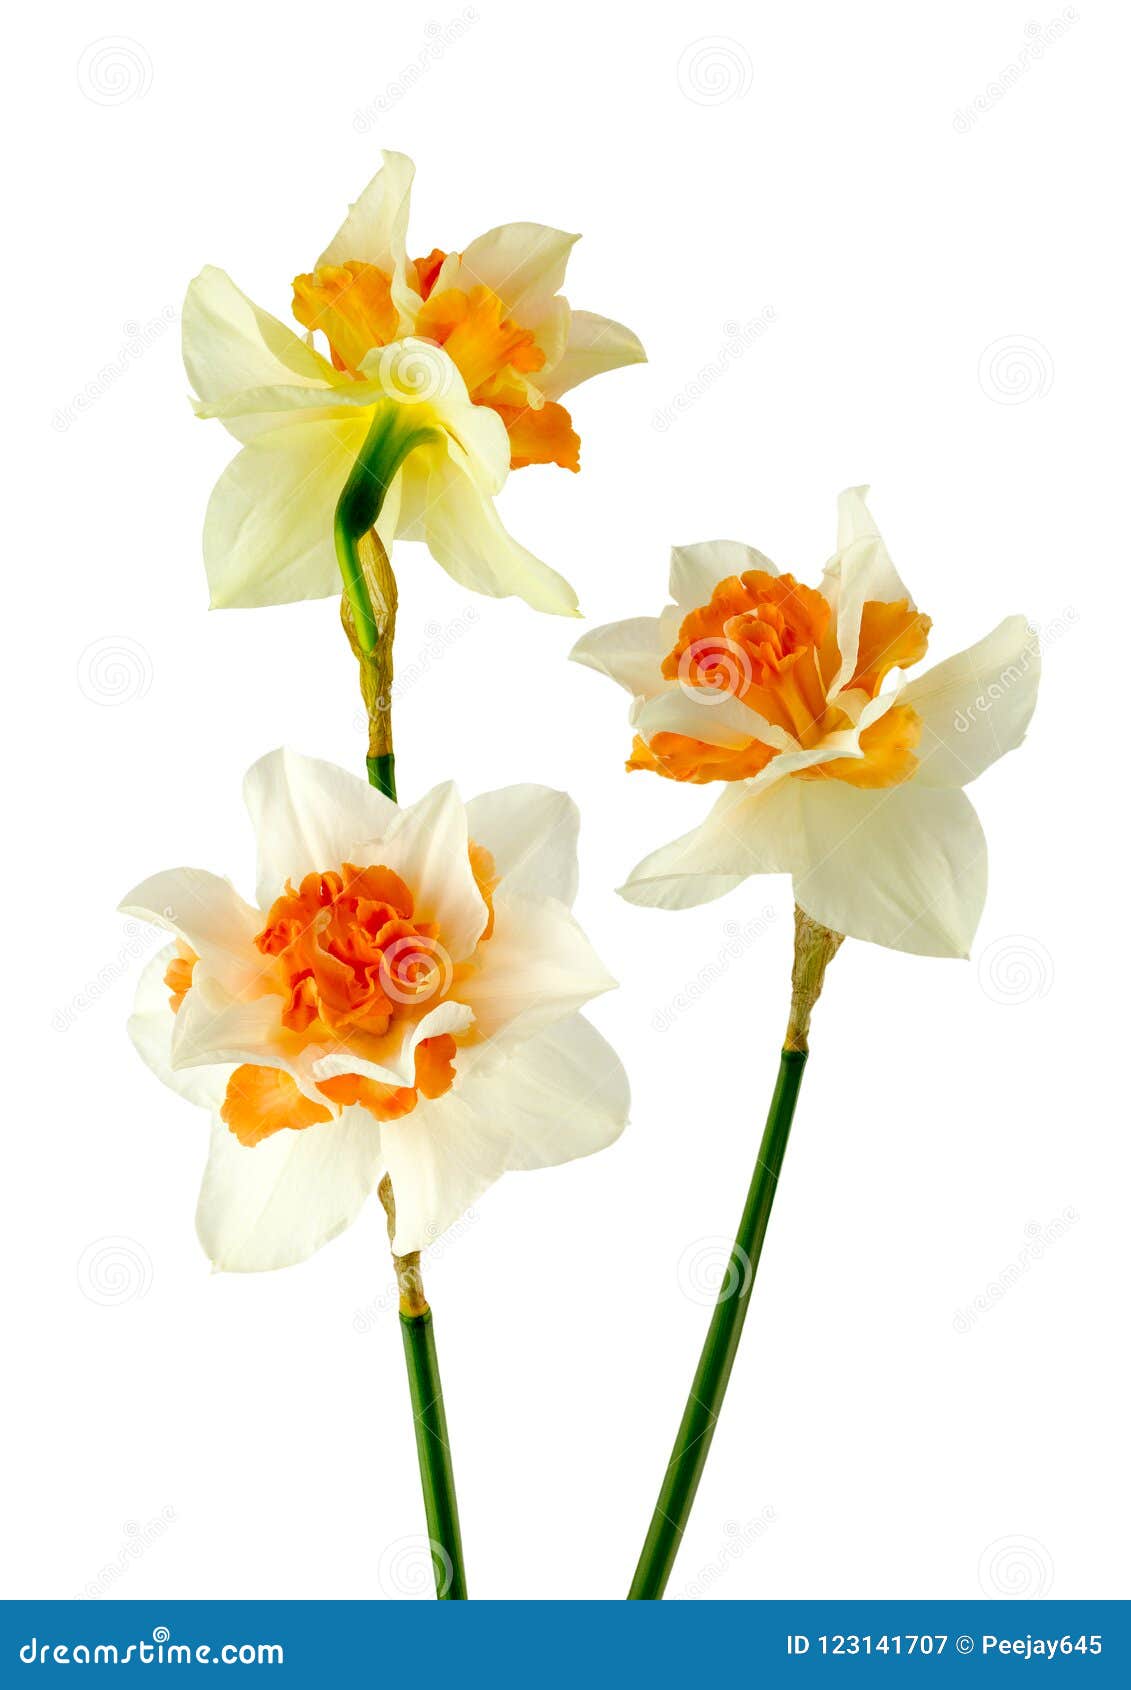 Very beautiful Daffodils stock image. Image of flowers - 123141707